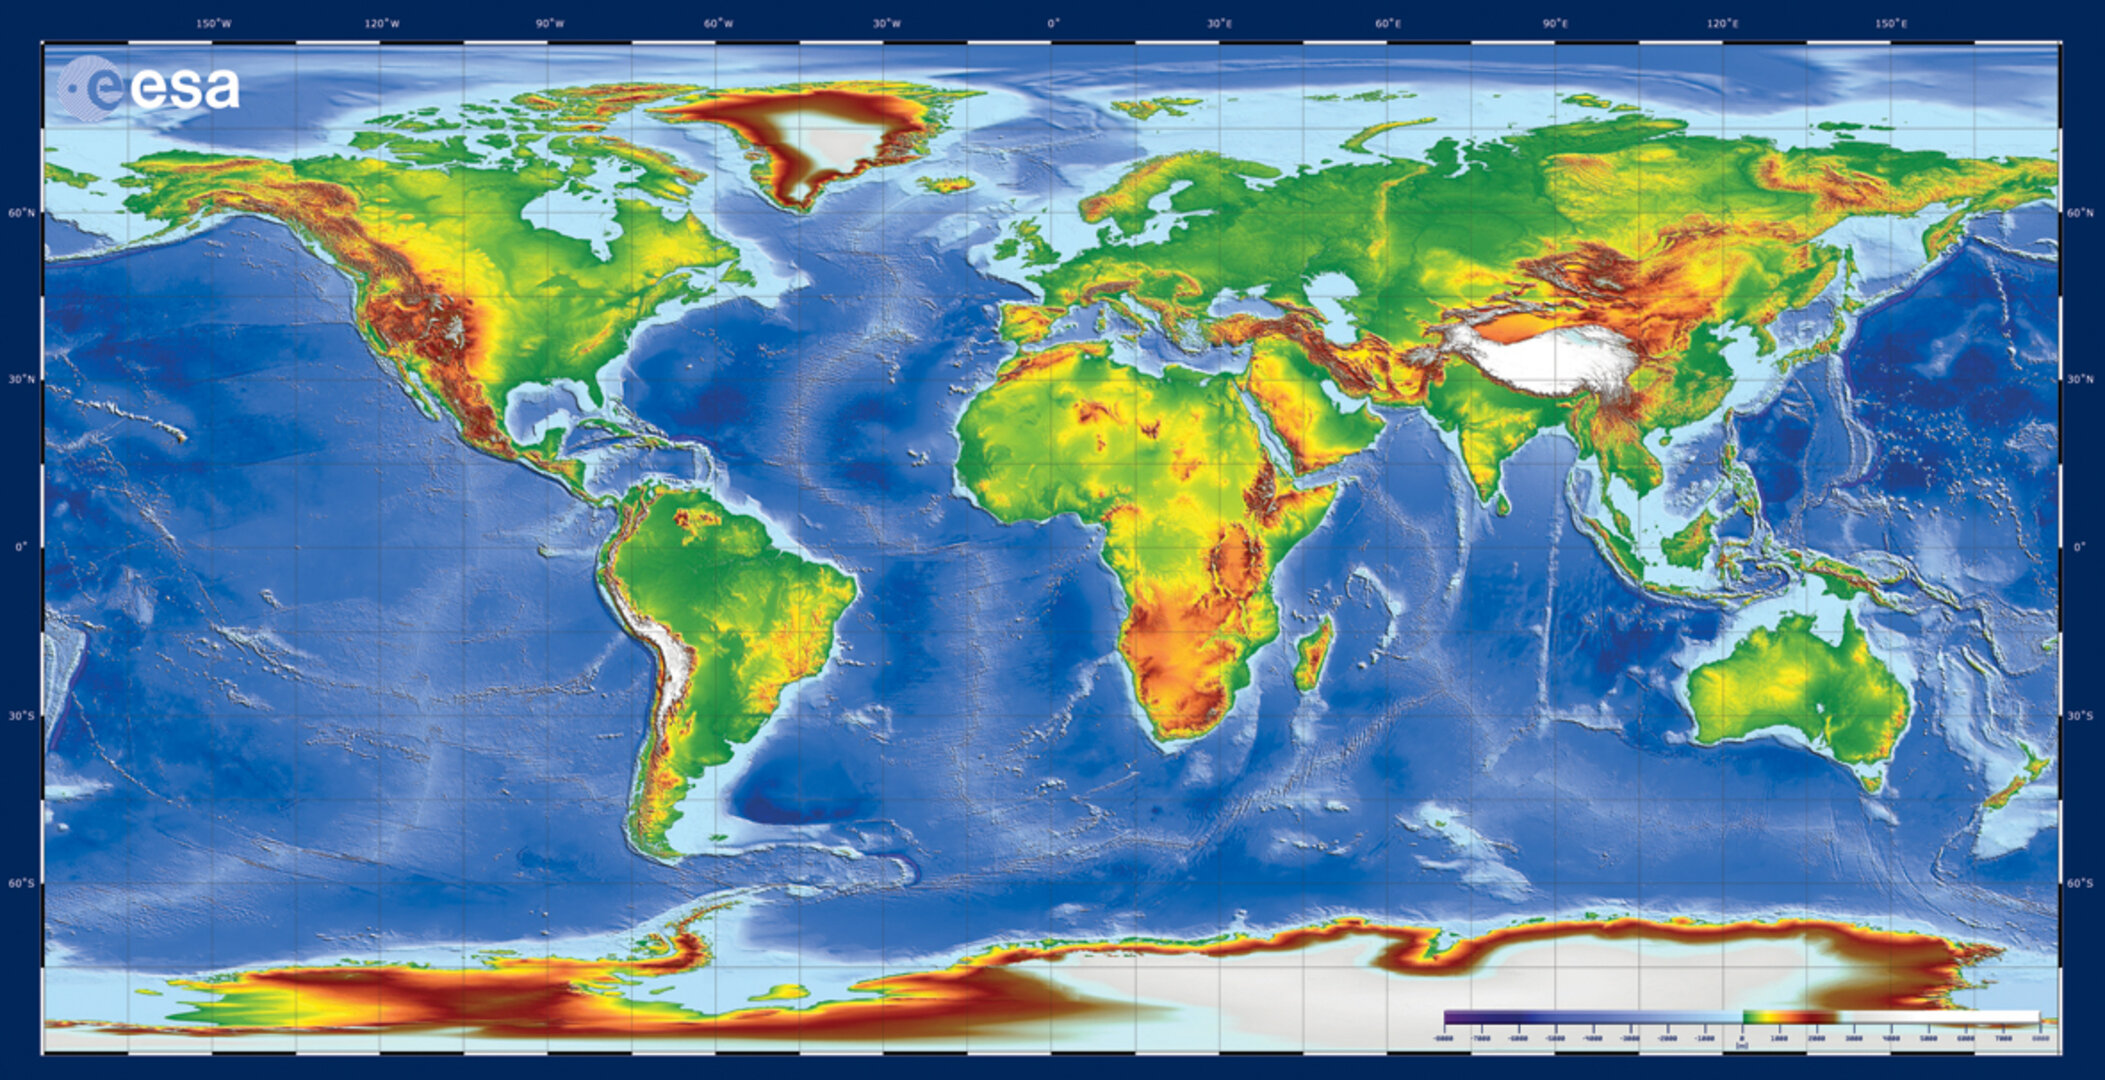 The world from radar altimetry